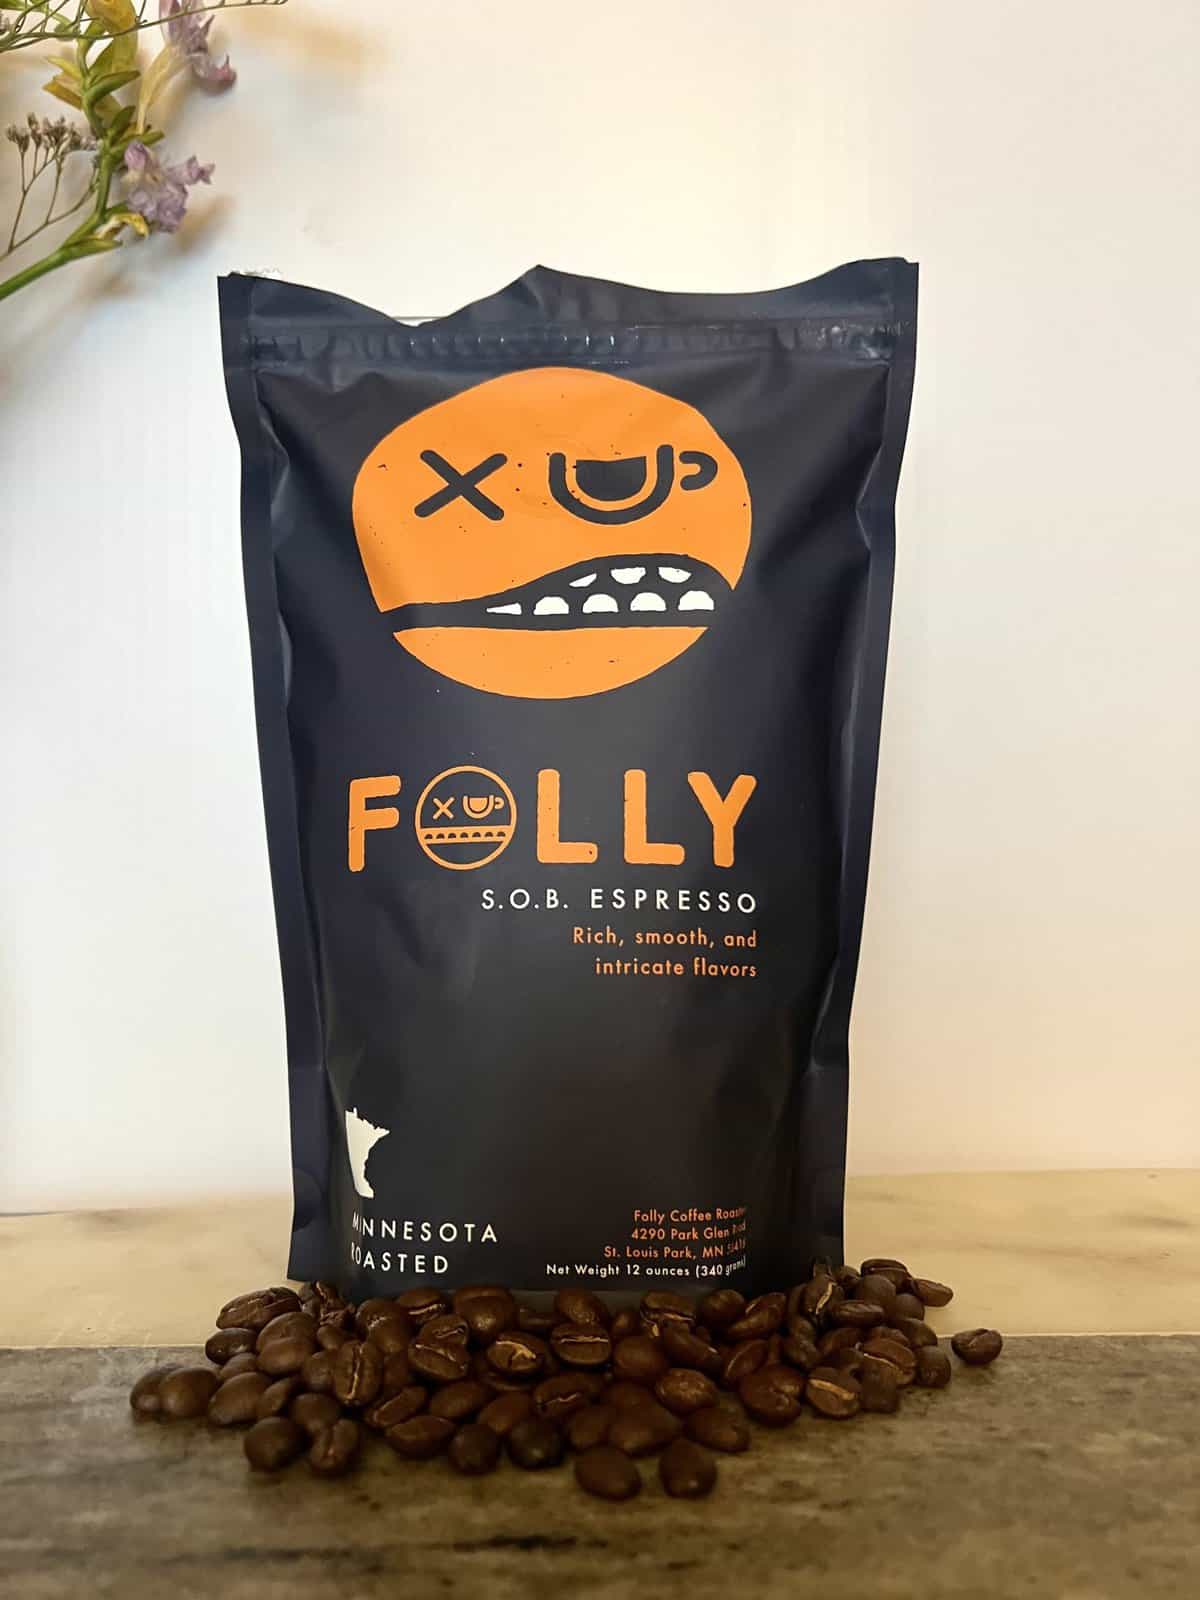 S.O.B. Espresso Folly coffee pack next to coffee beans